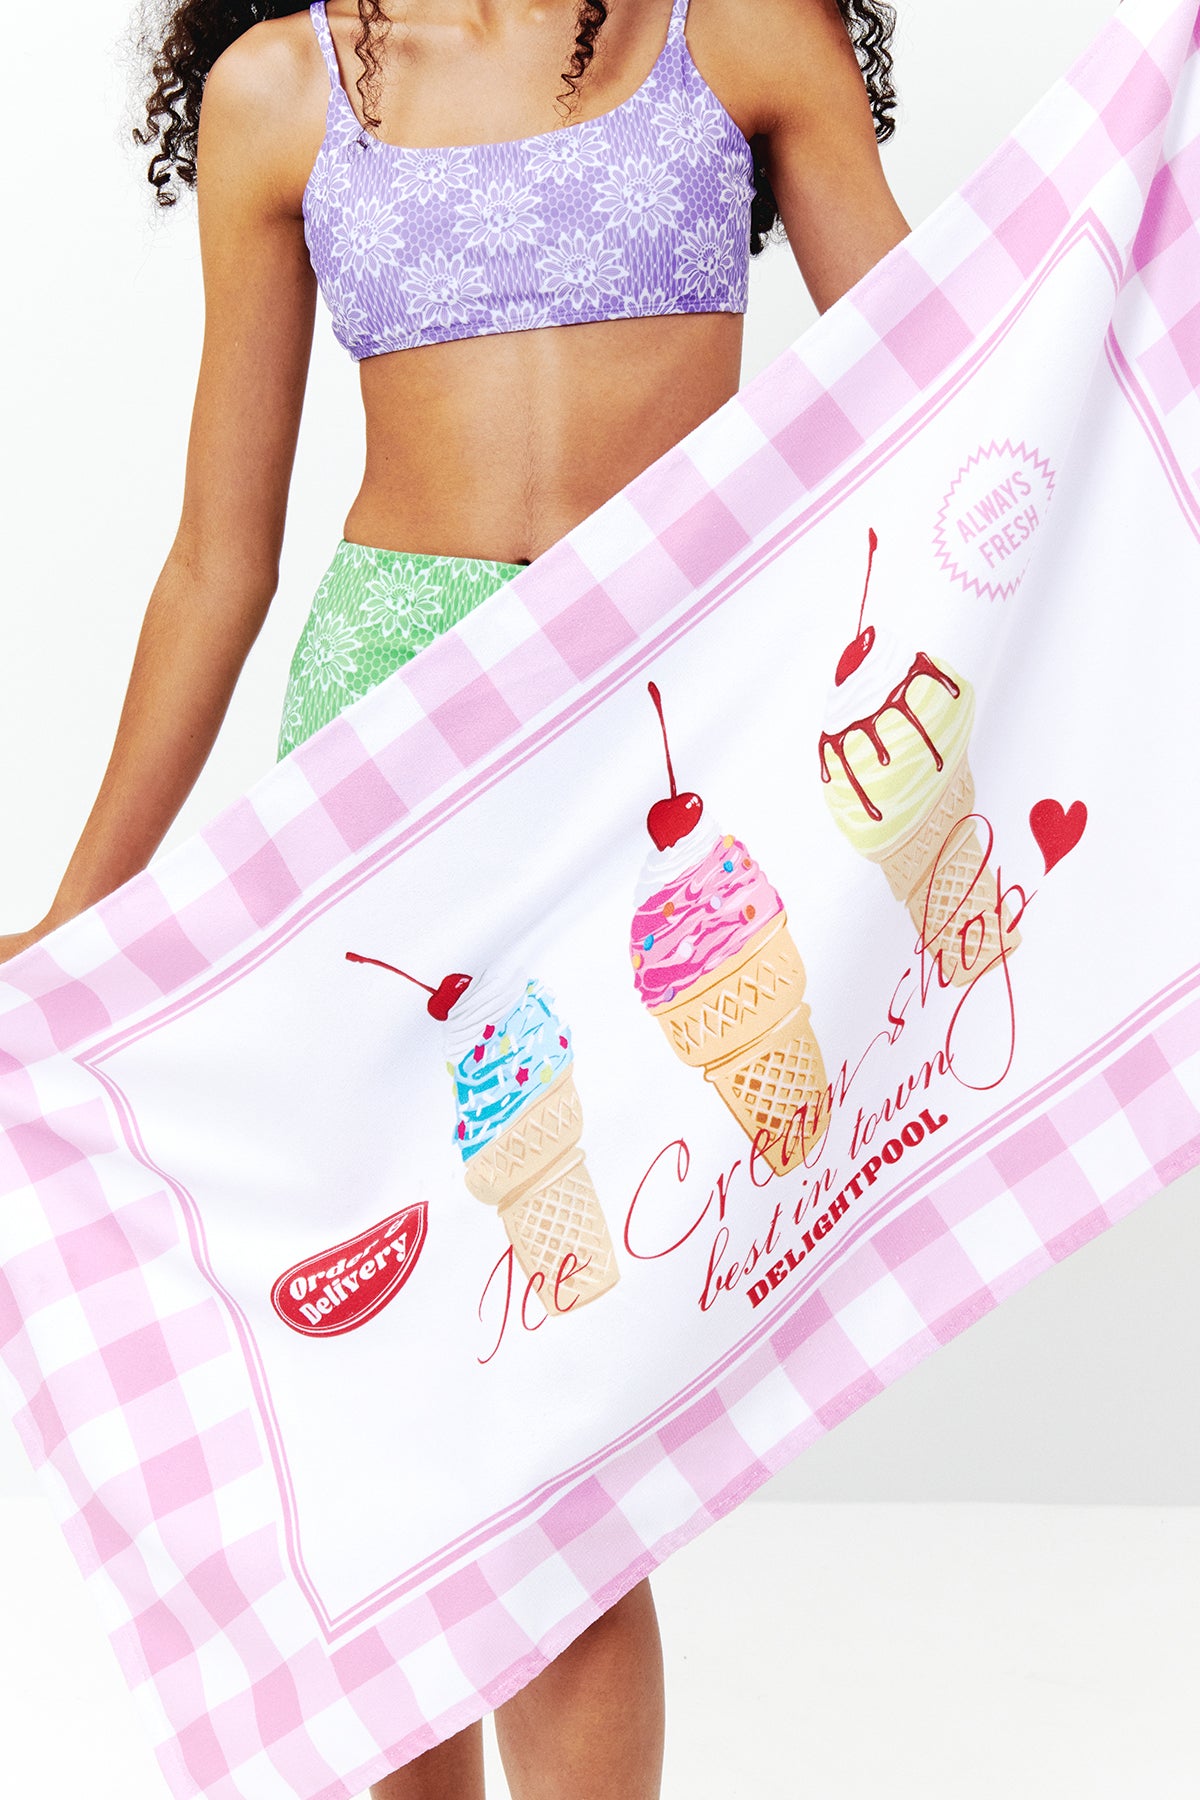 Ice cream Shop Beach Towel - Pink